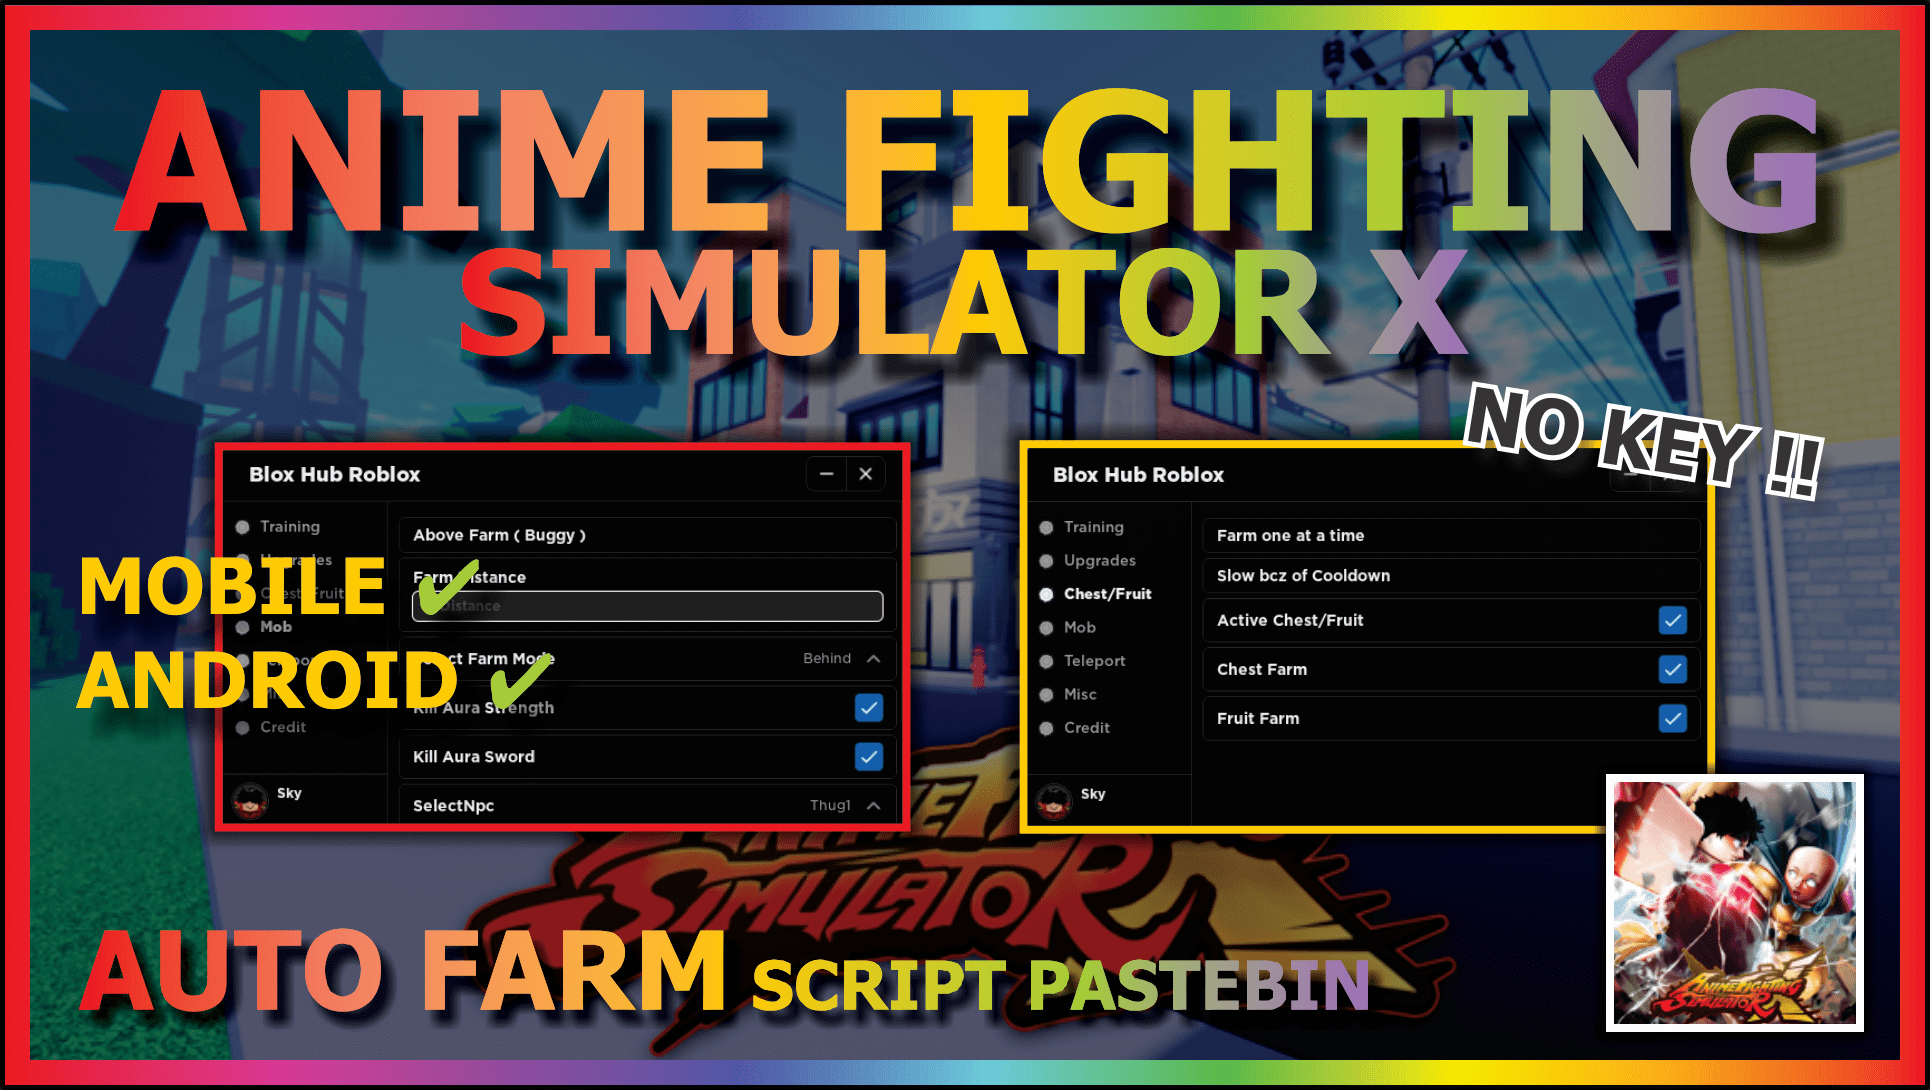 Anim Fighting Simulator X Scripts Mobile Scripts - Blox Fruit Script